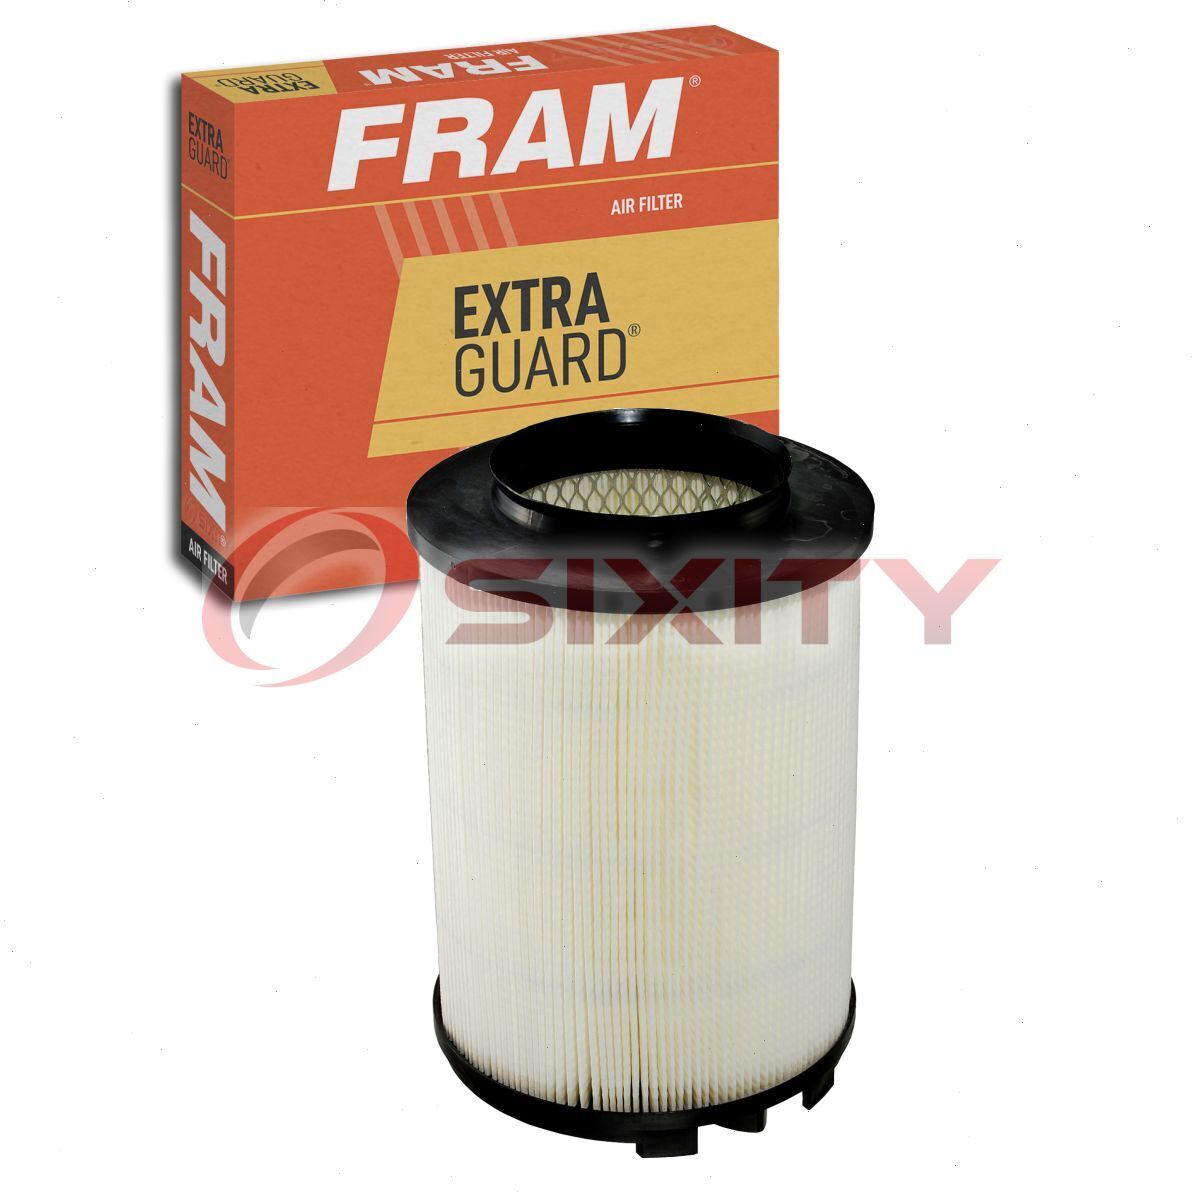 FRAM Extra Guard Air Filter for 2006-2007 Hummer H3 Intake Inlet Manifold cr